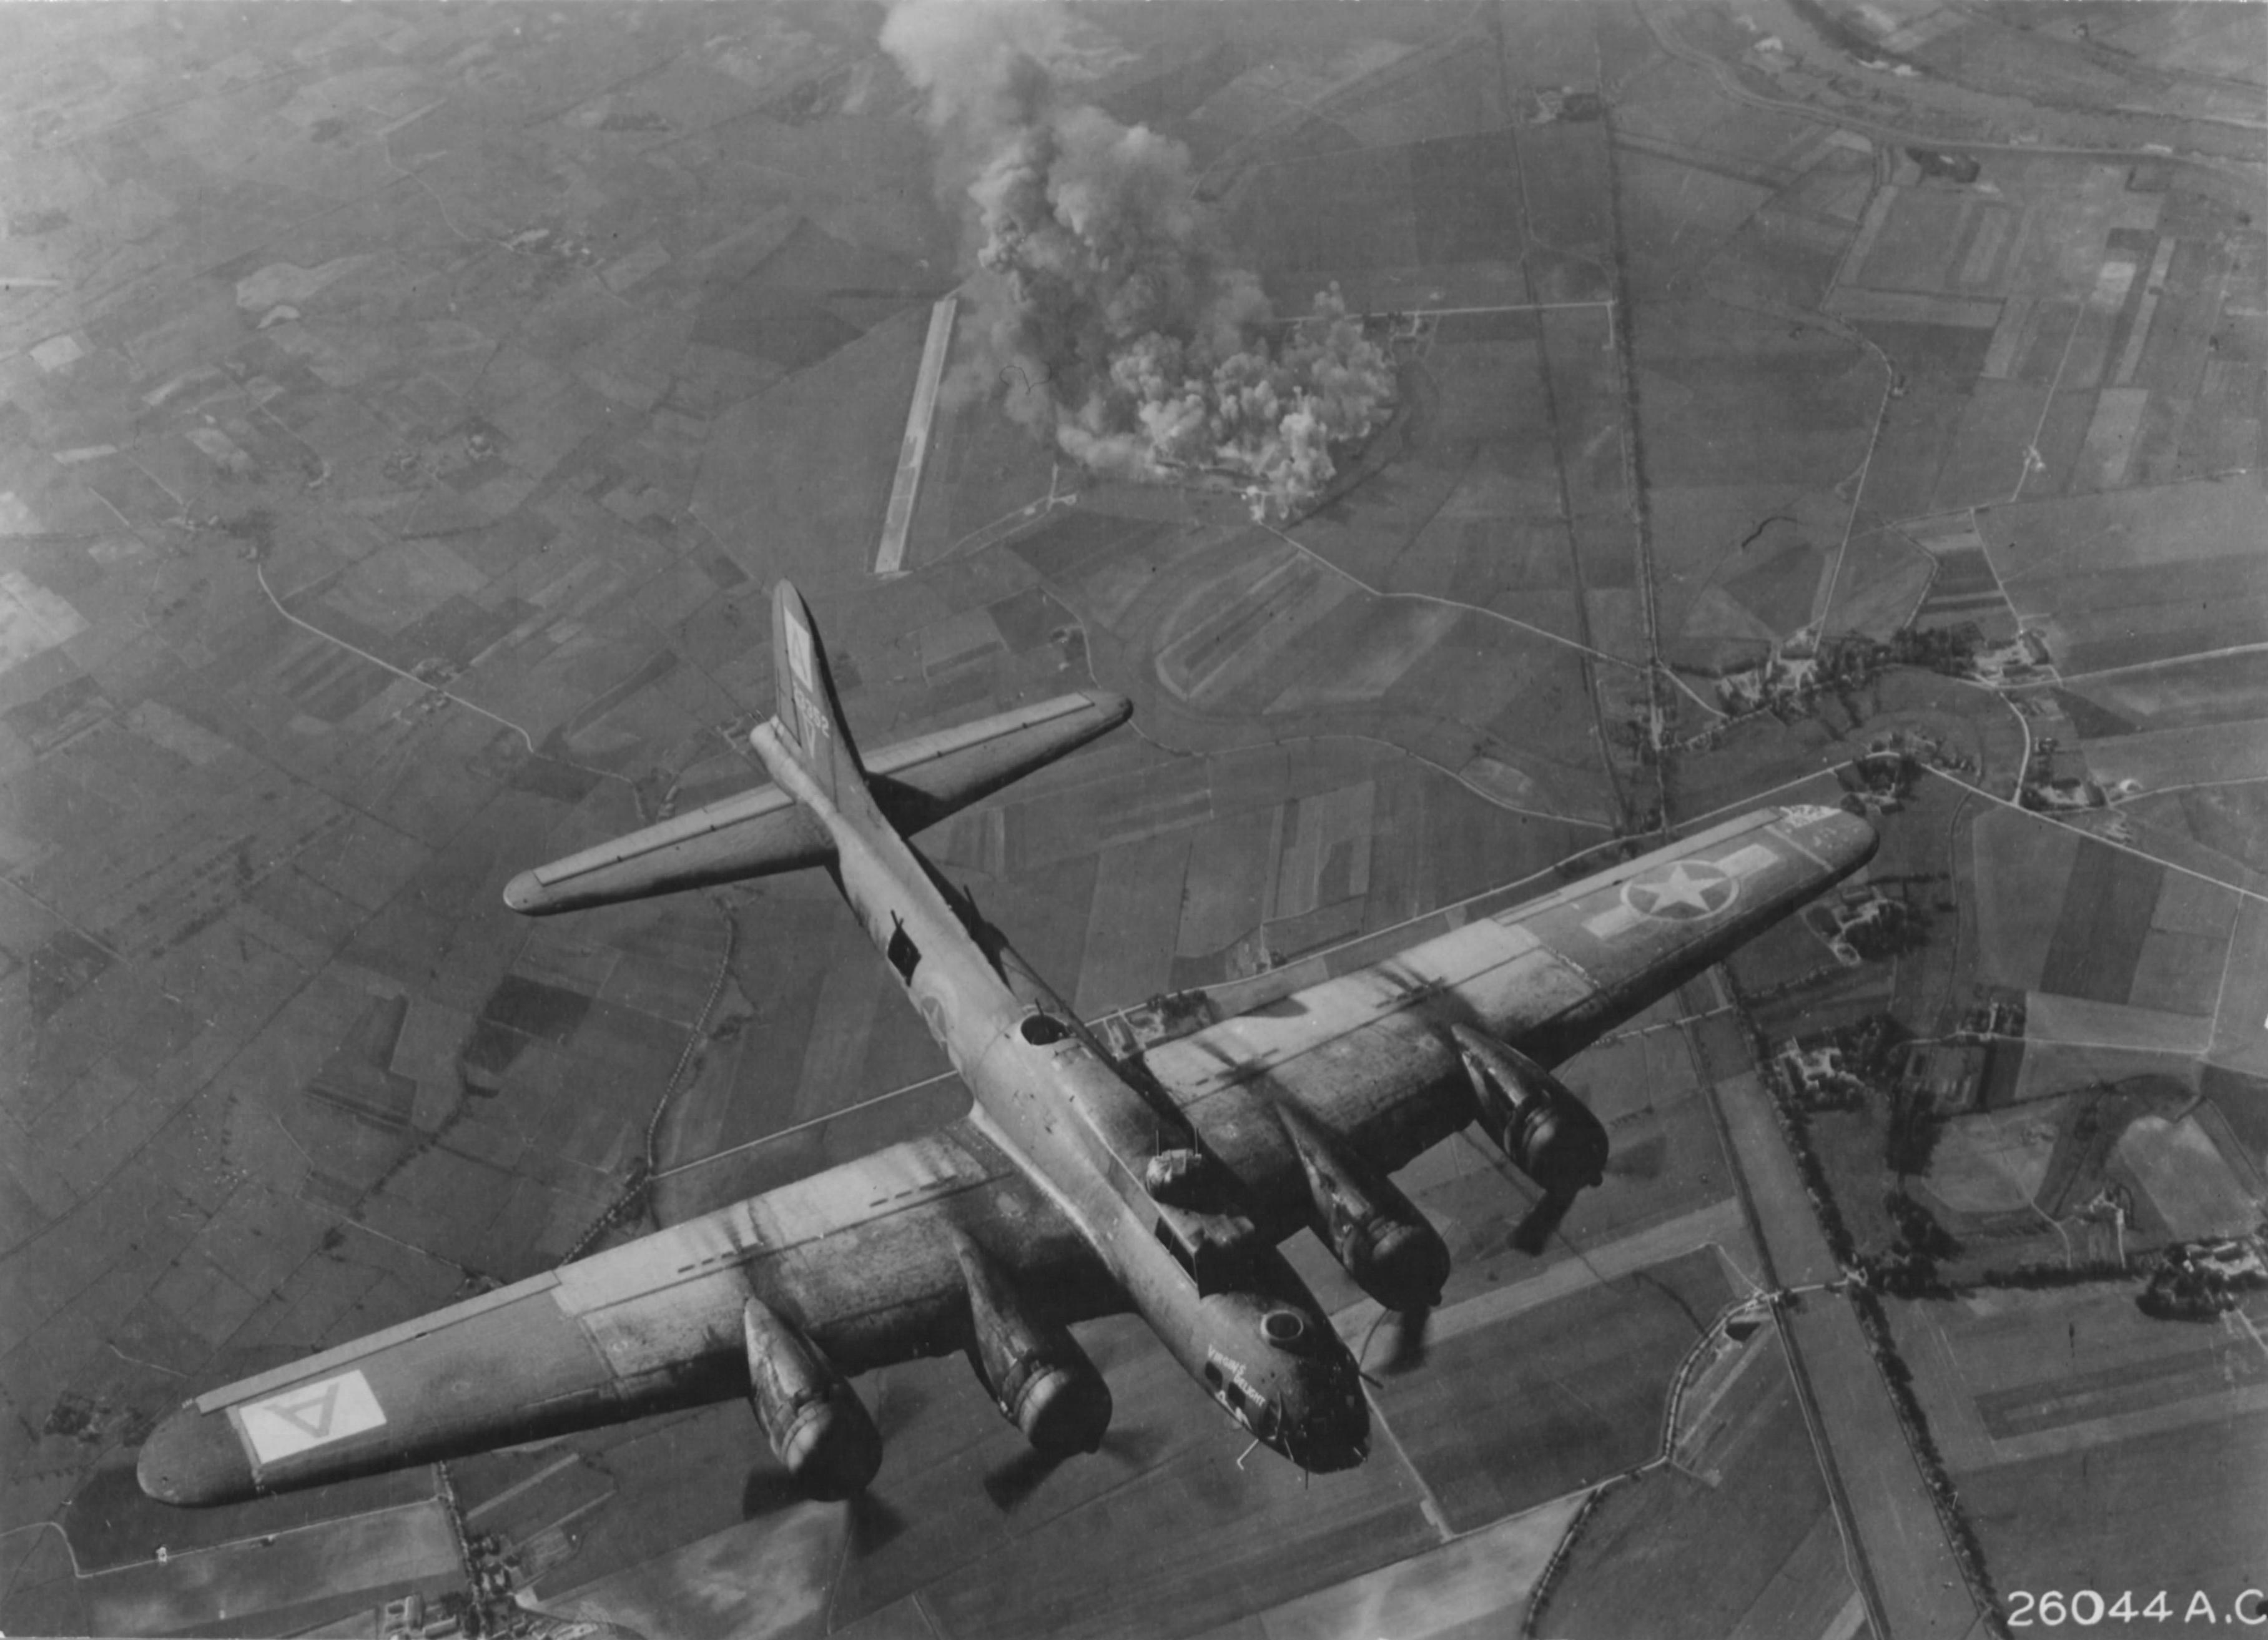 8th Air Force B-17 bomber raiding Focke Wulf plants at Marienburg, Germany (now Malbork, Poland), Oct 9 1943